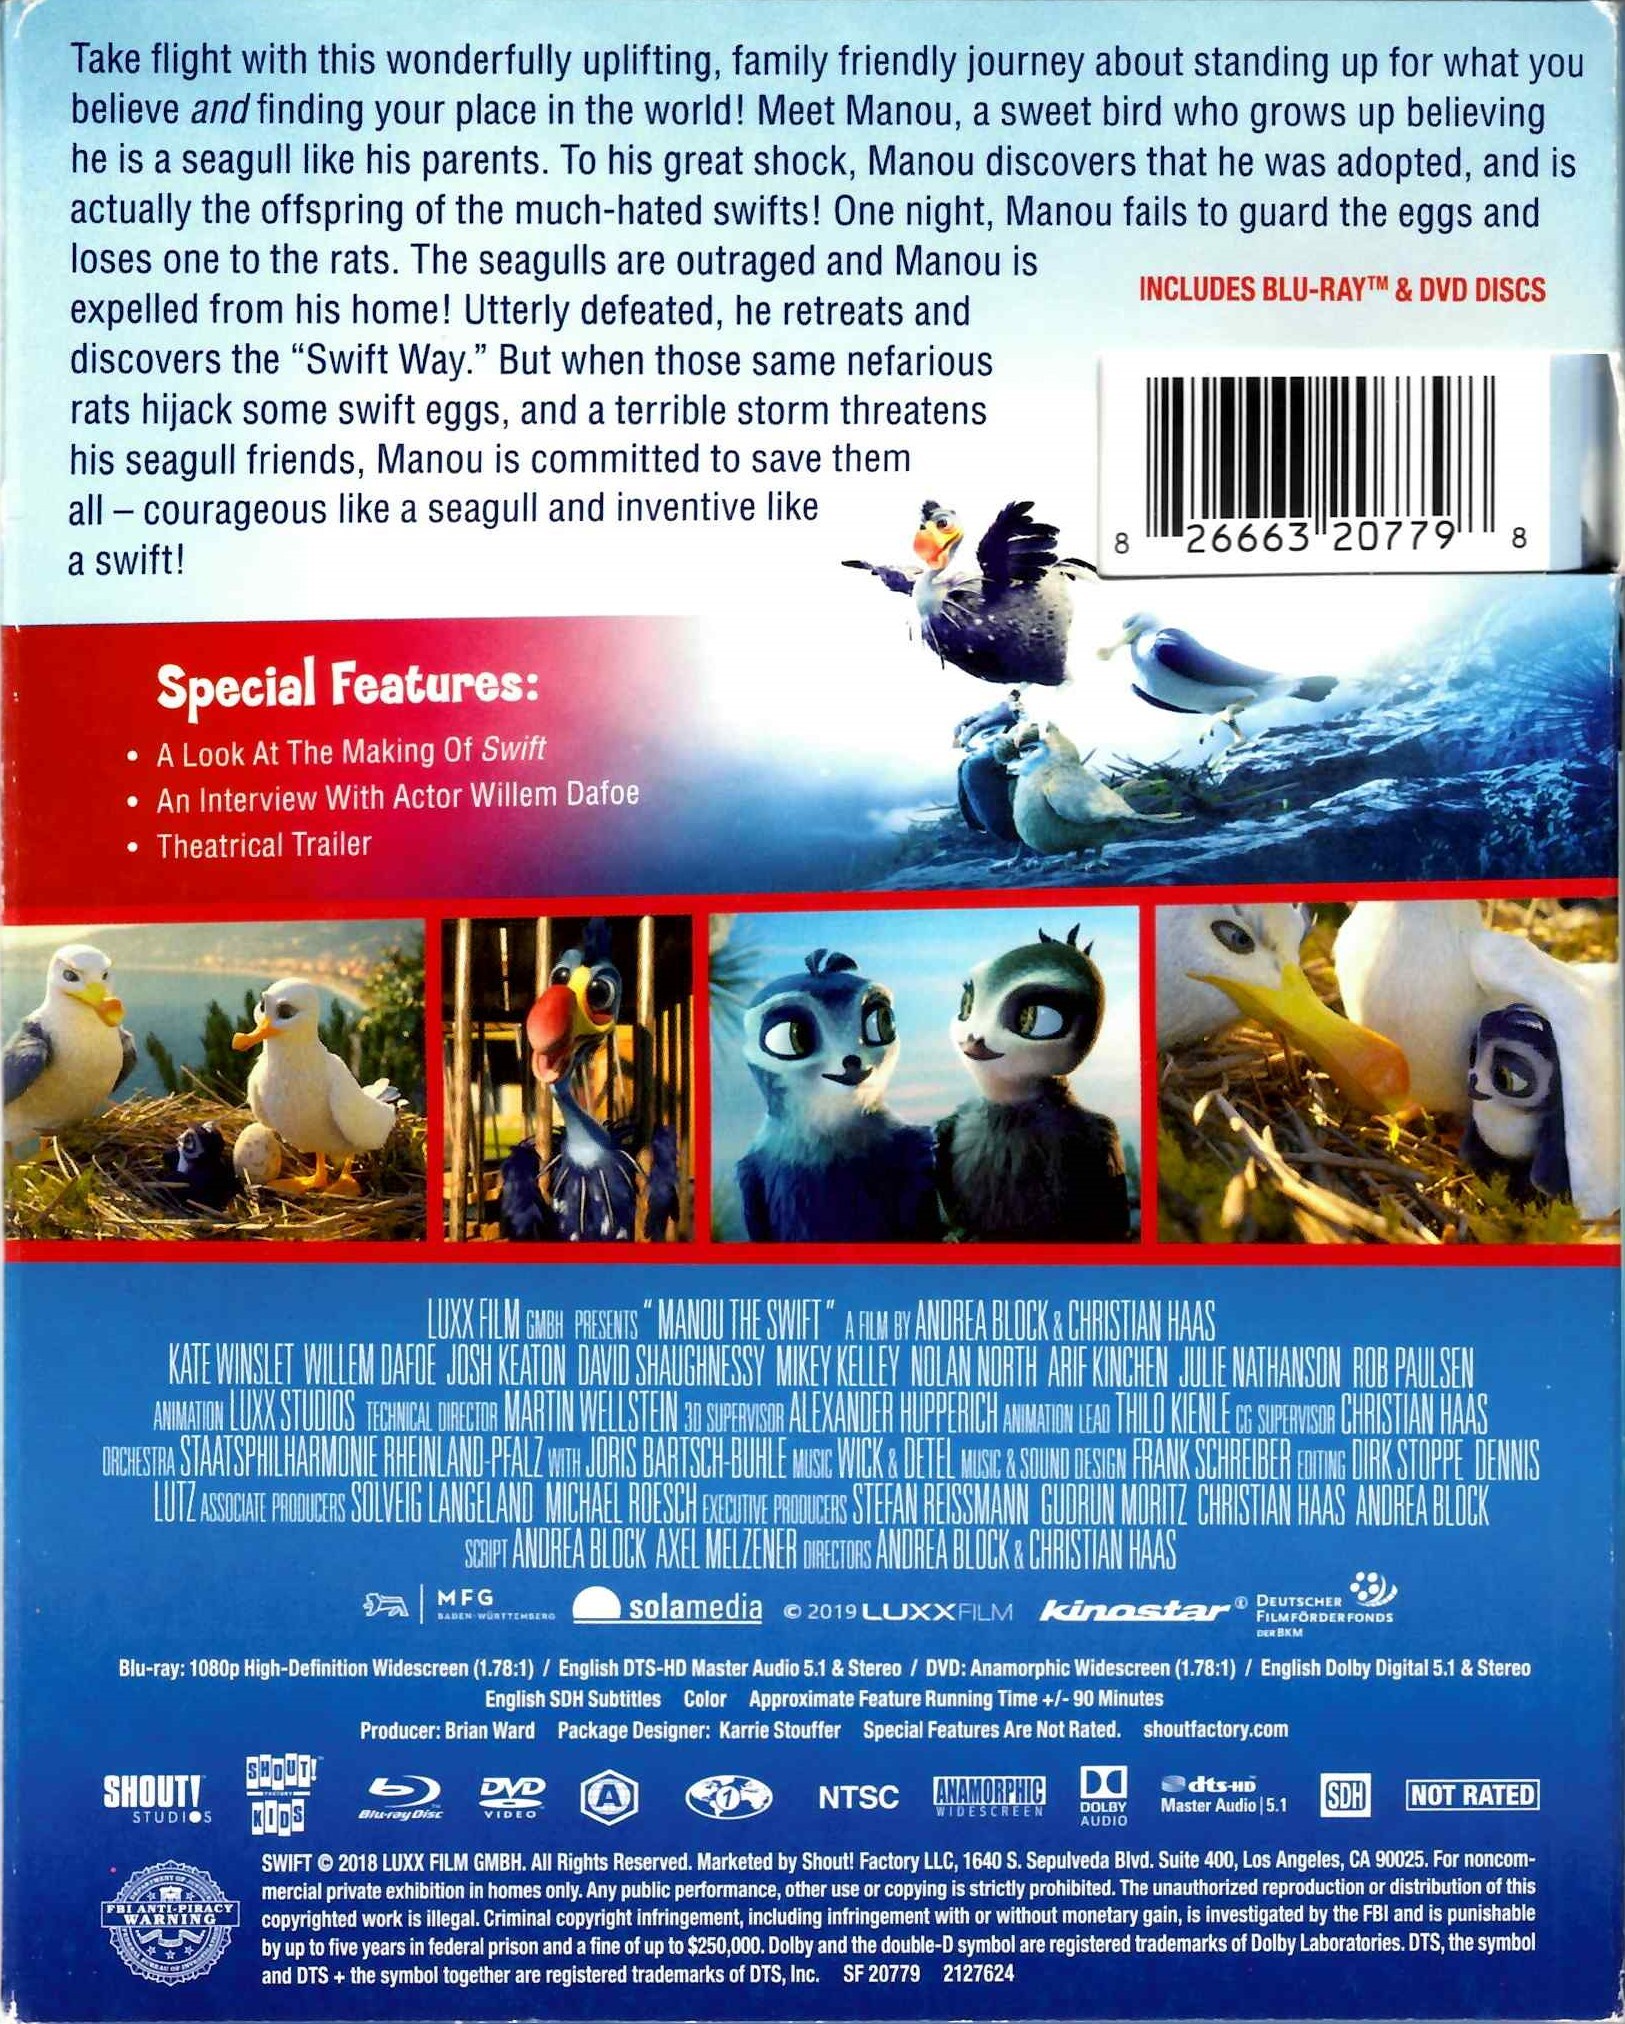 Swing Shift {25757113766} U - Side 2 - CED Title - Blu-ray DVD Movie  Precursor